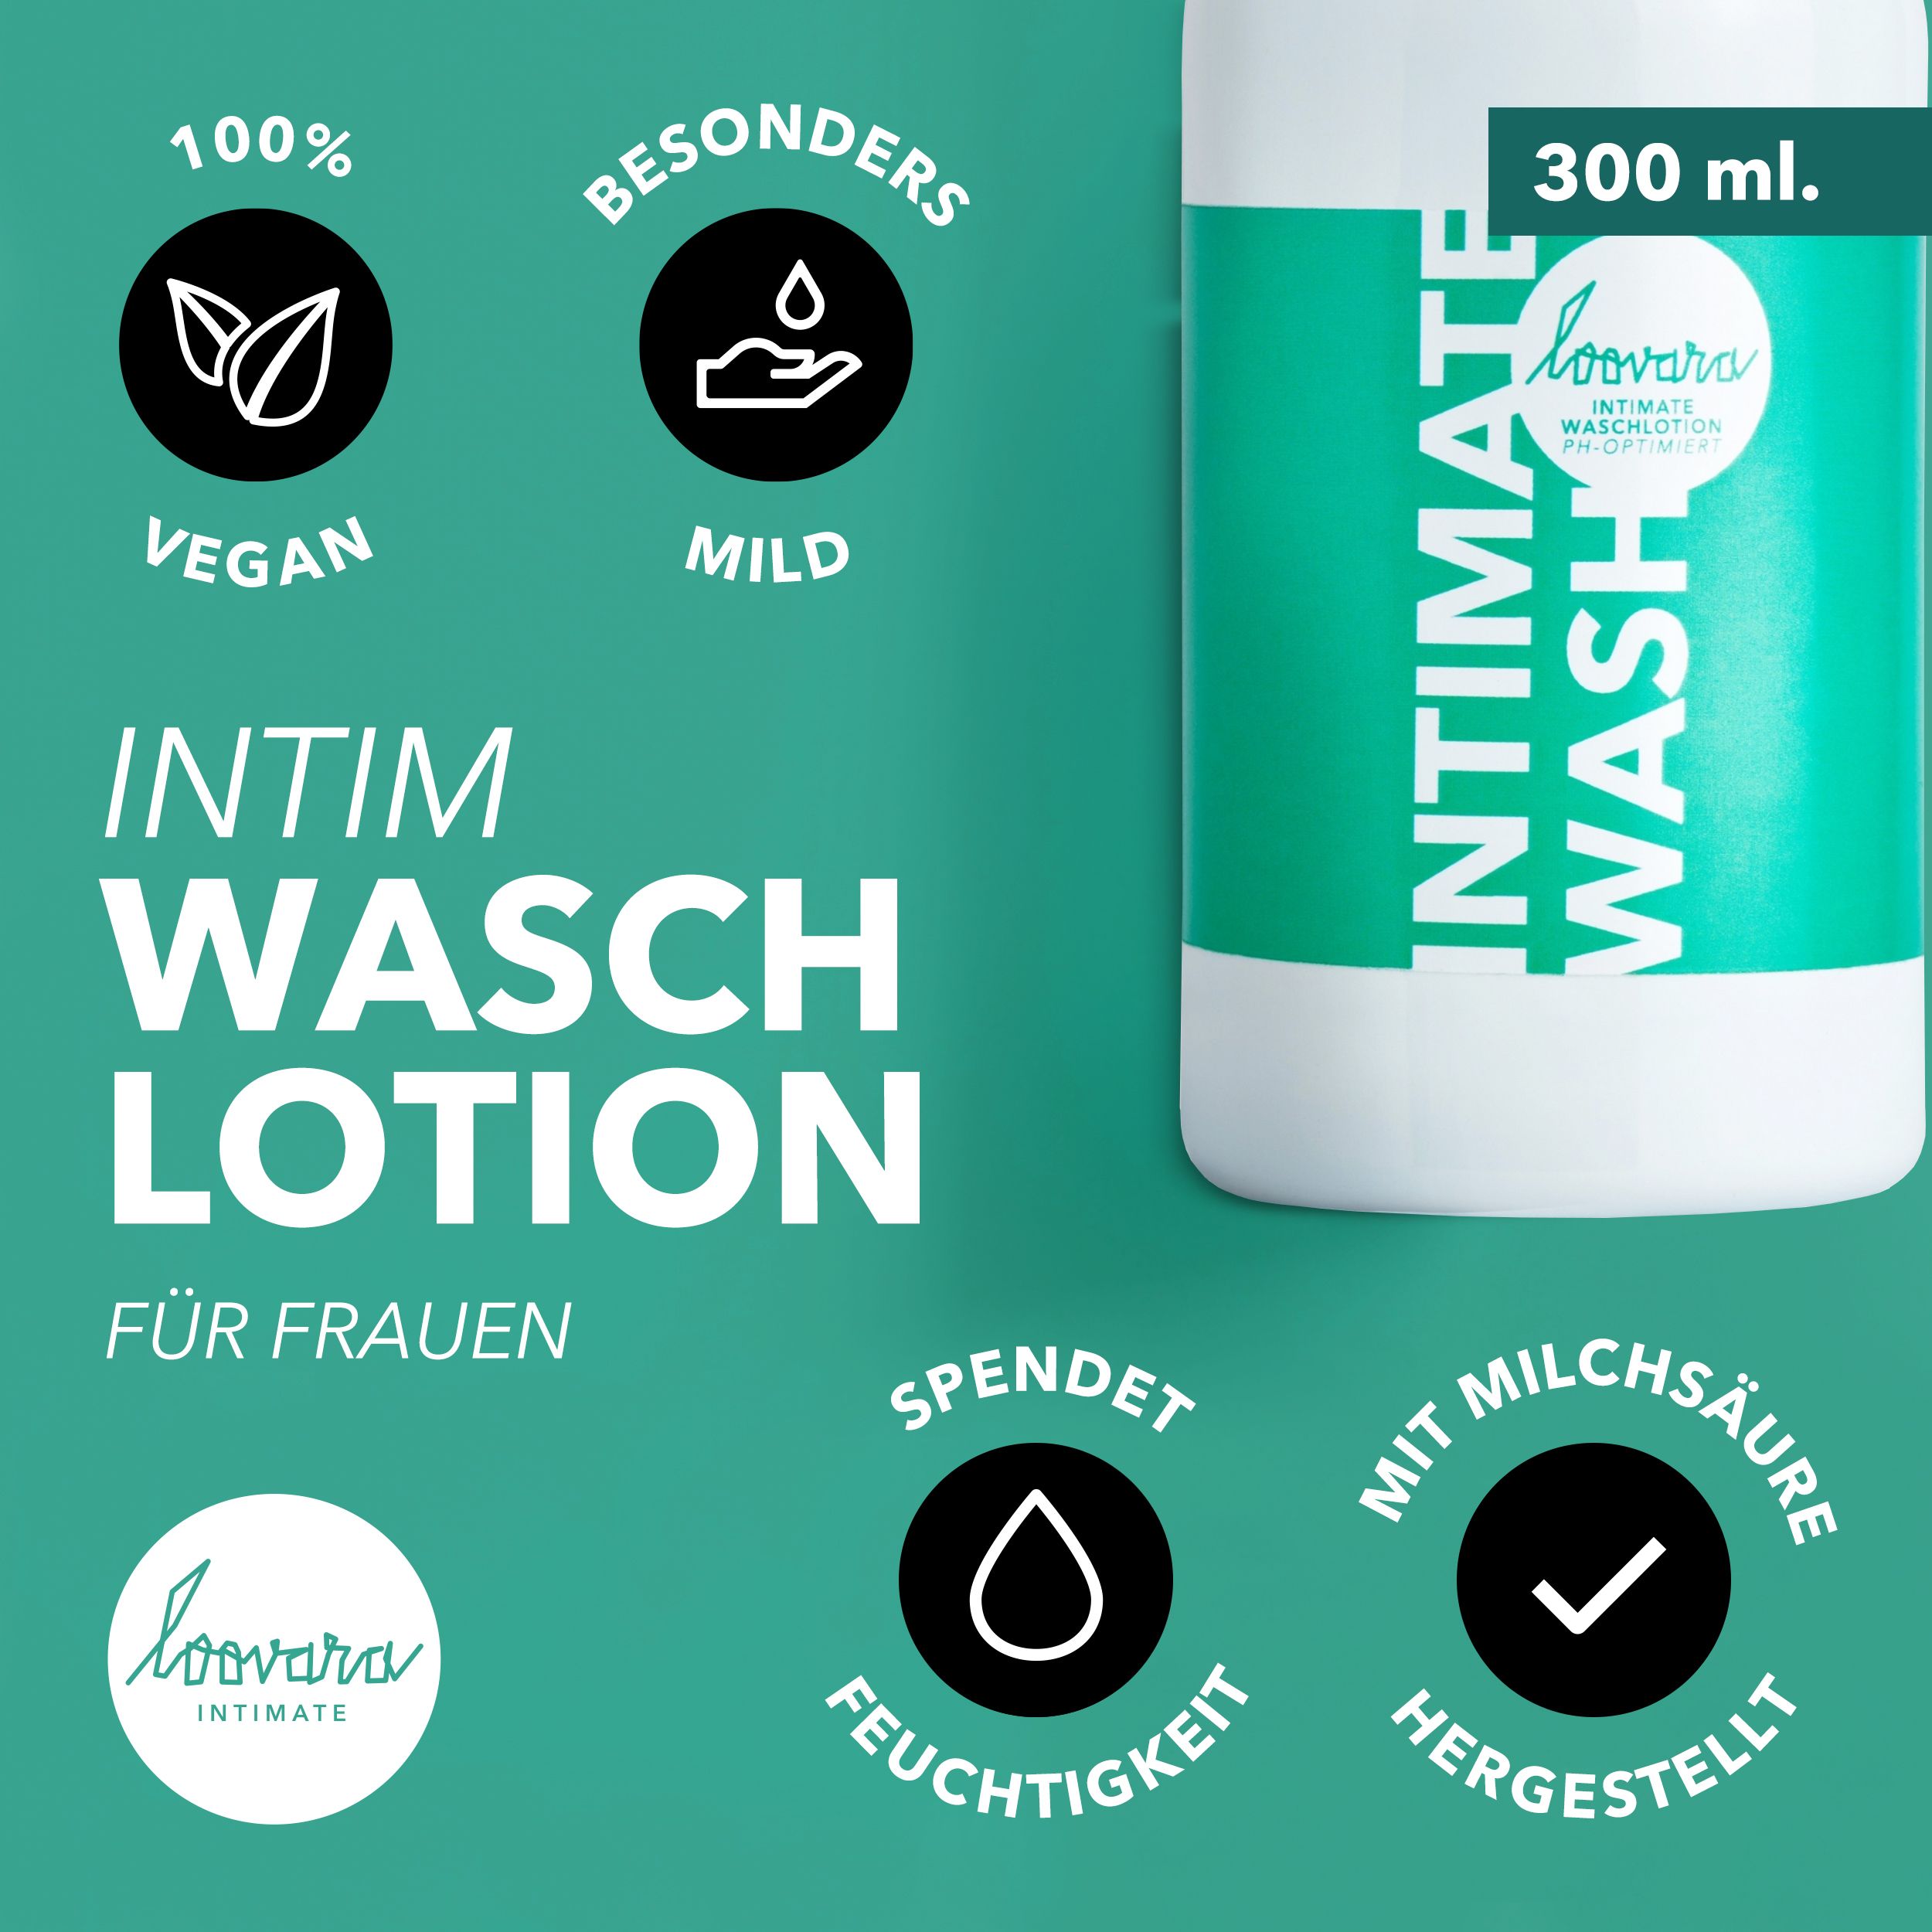 Loovara Intim Waschlotion - INTIMATE WASH - Optimaler Ph-Wert 300 ml - SHOP  APOTHEKE